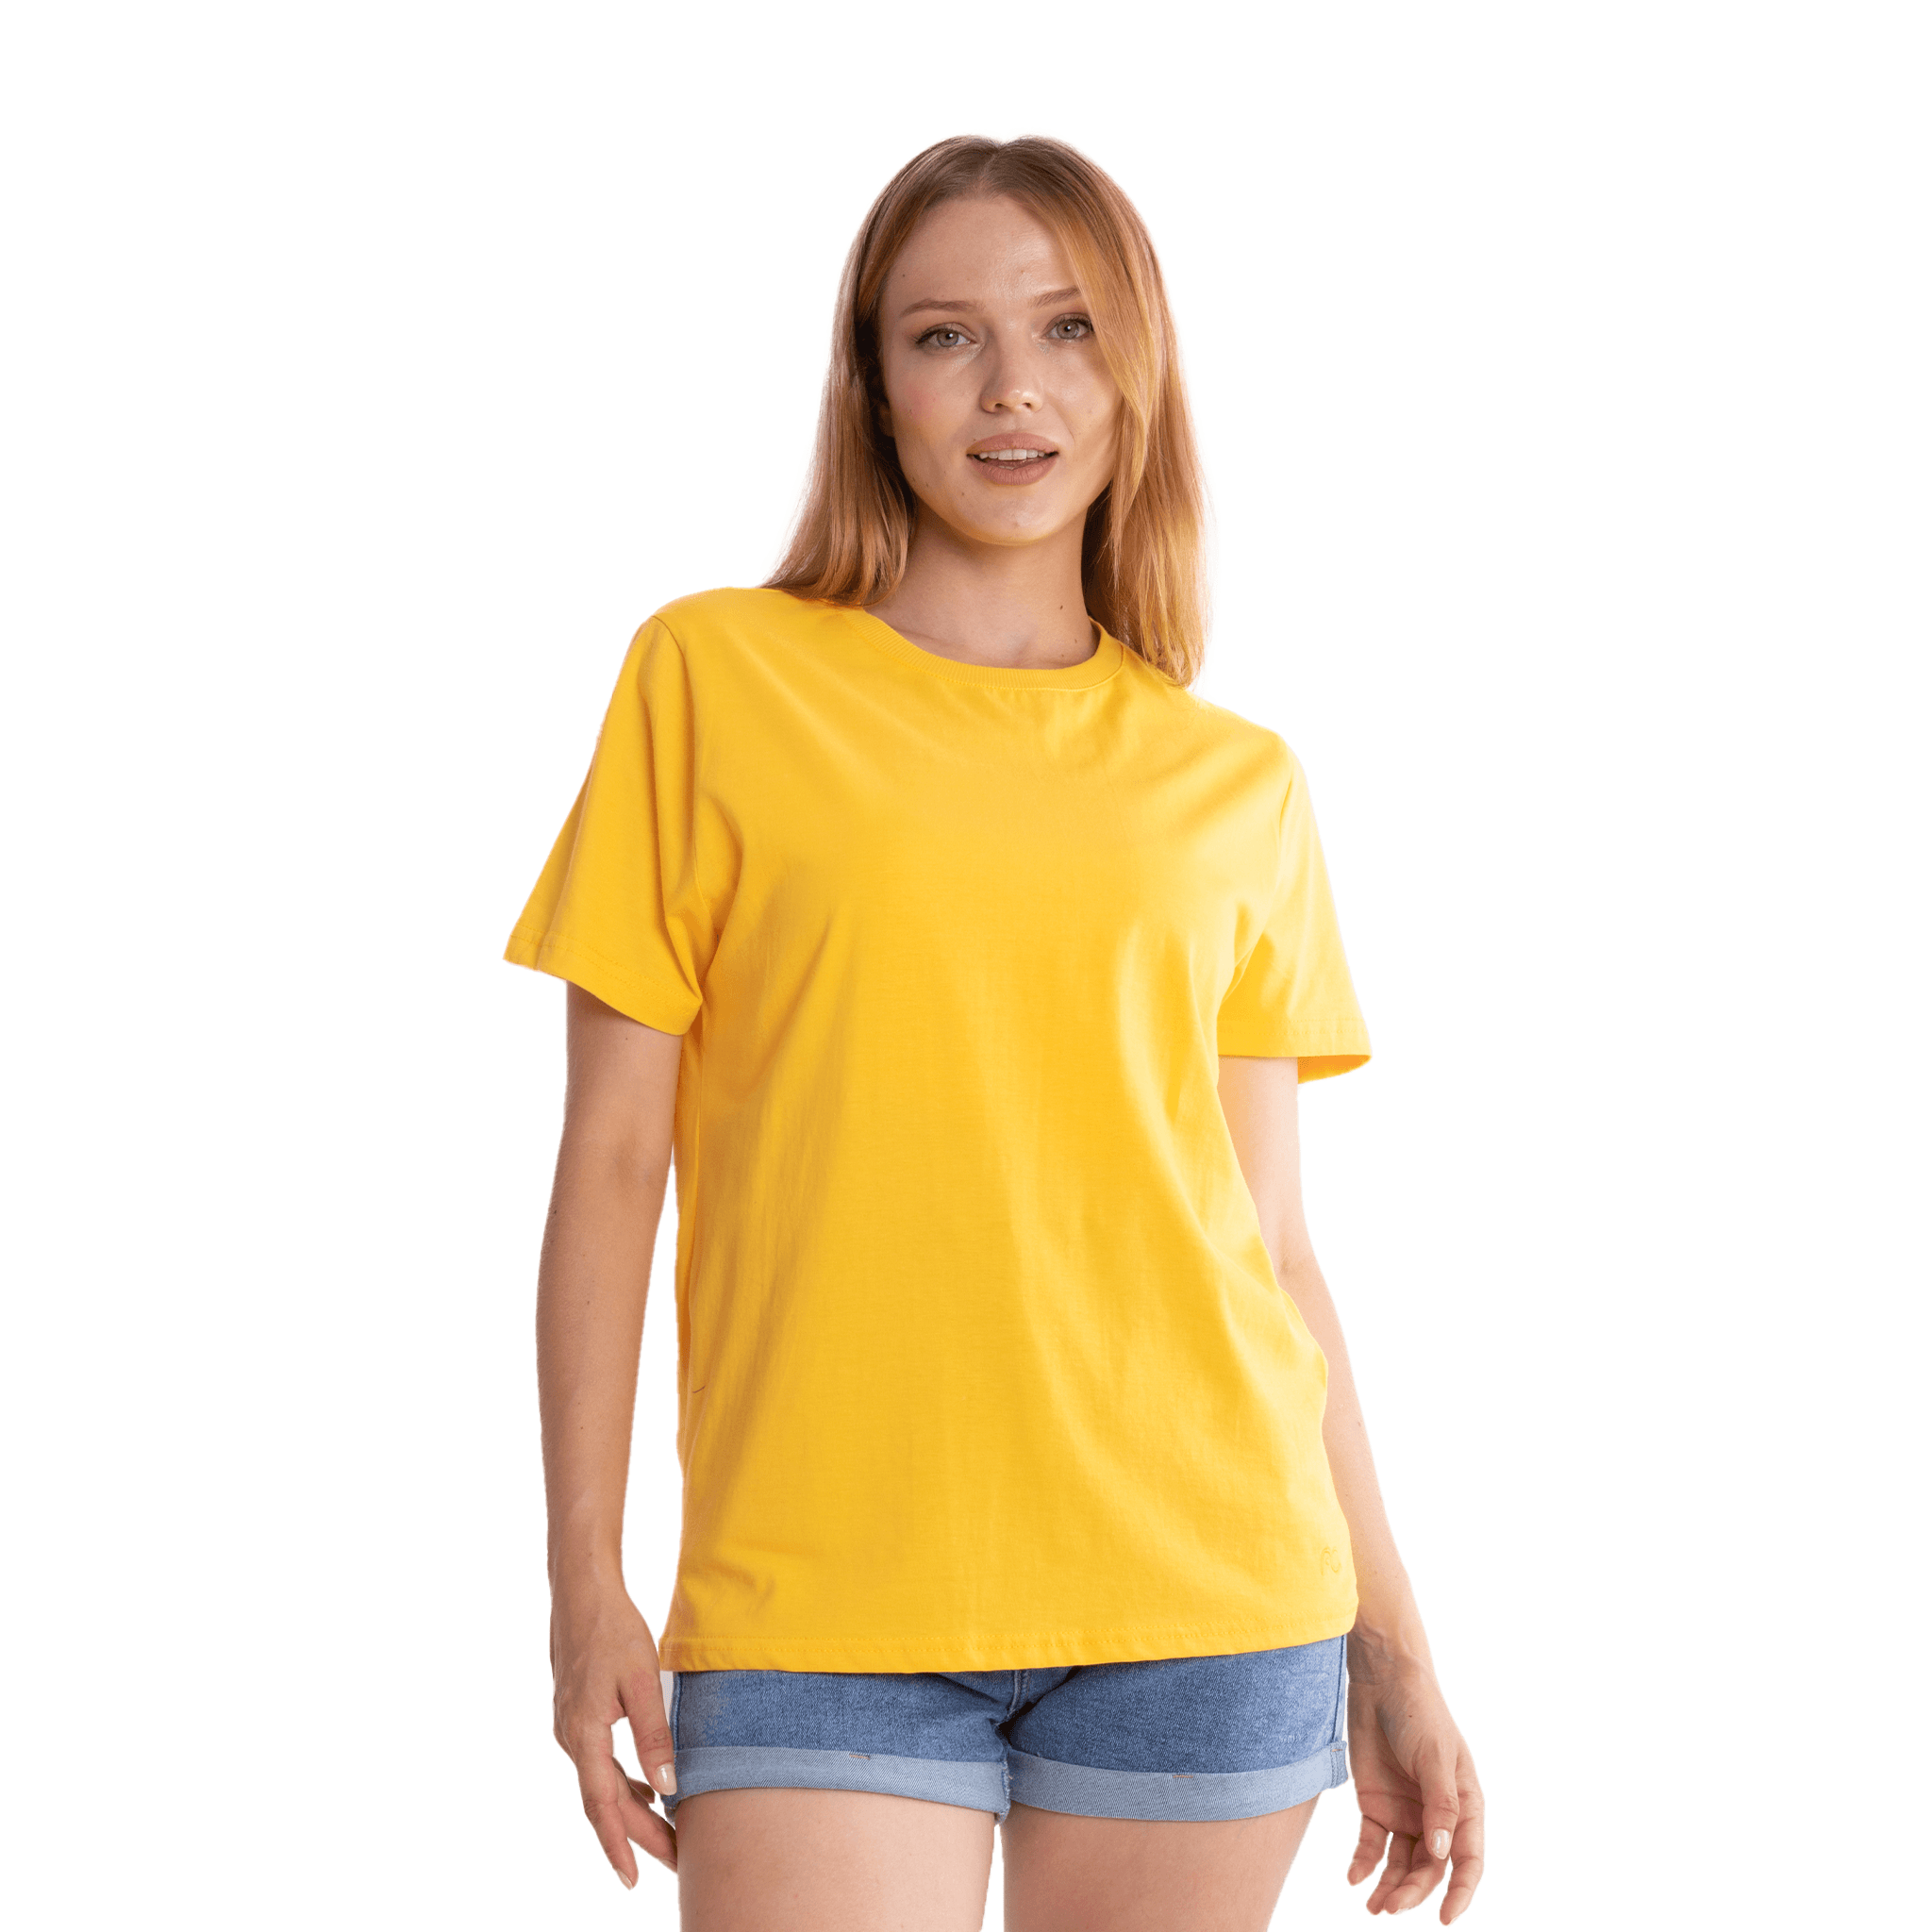 Norm T-Shirt - Mustard Yellow